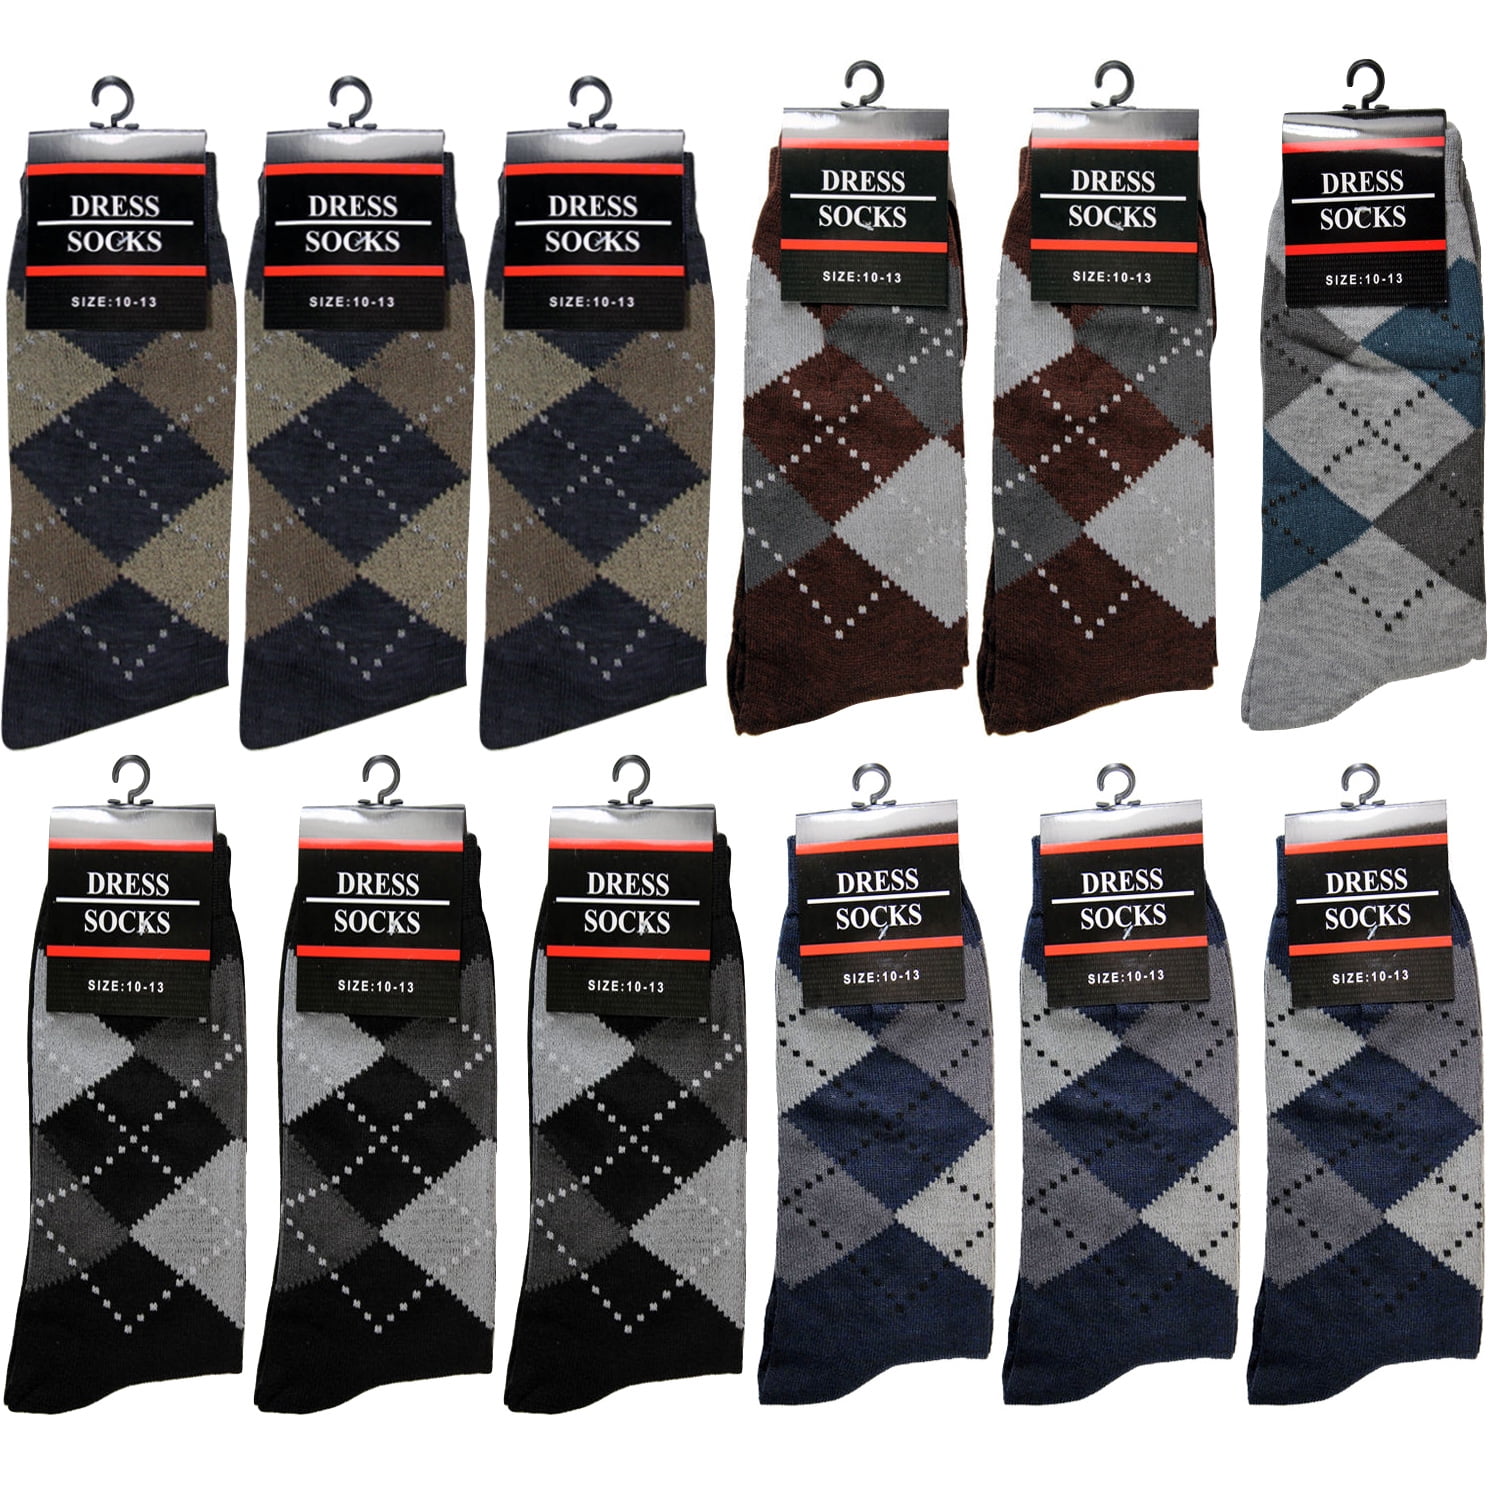 12 Pairs New Cotton Men Argyle Diamond Style Dress Socks Size 10-13 Multi Color 